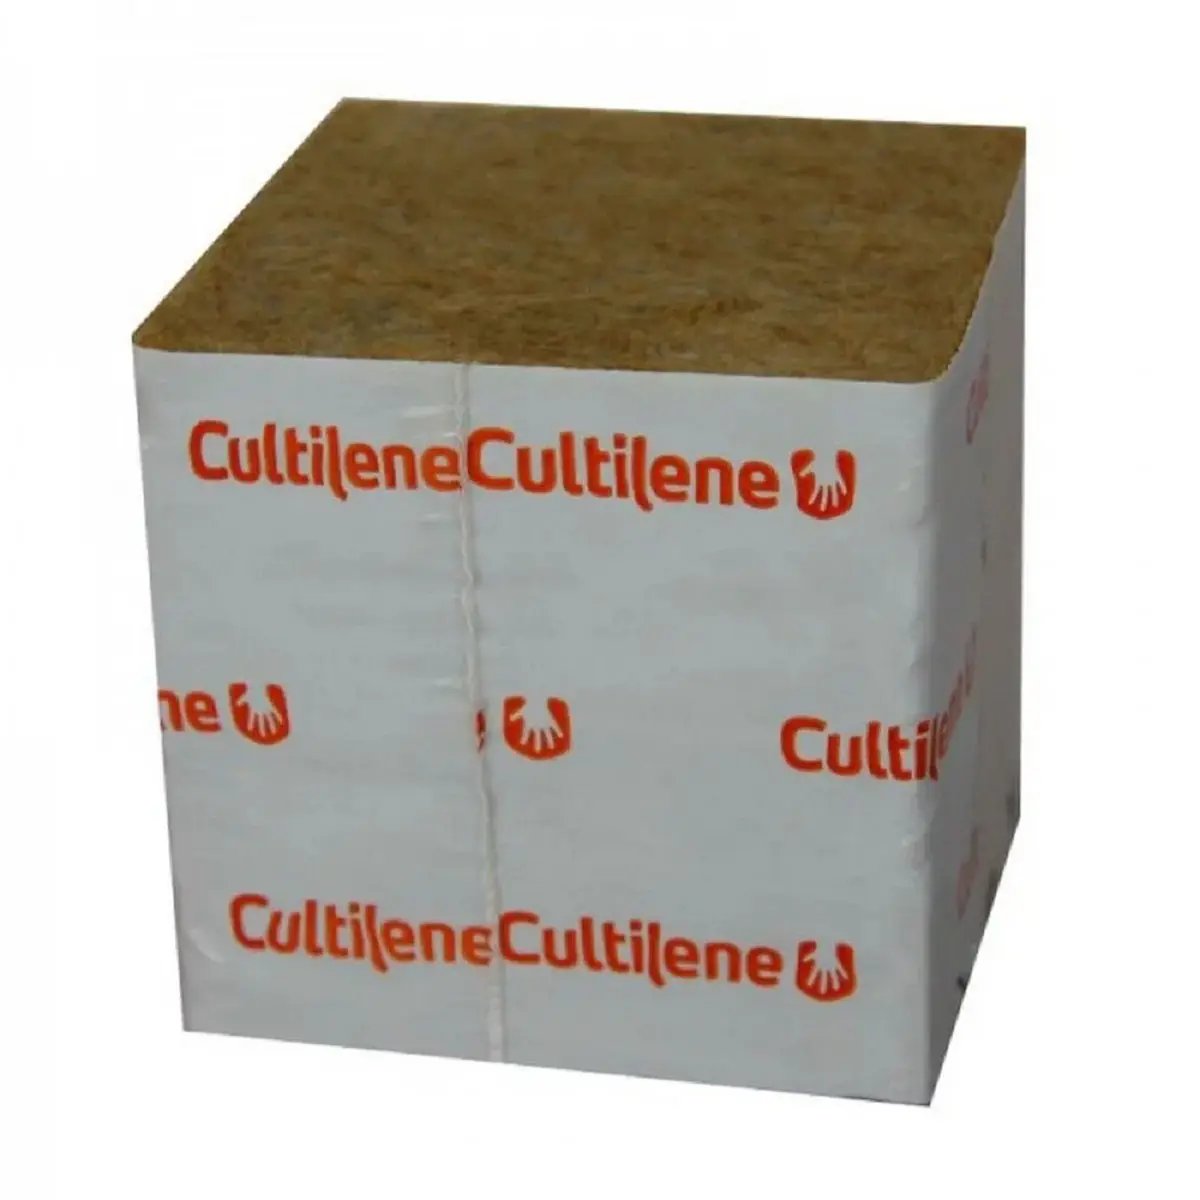 Cube LDR Cutilene 40x40x40mm